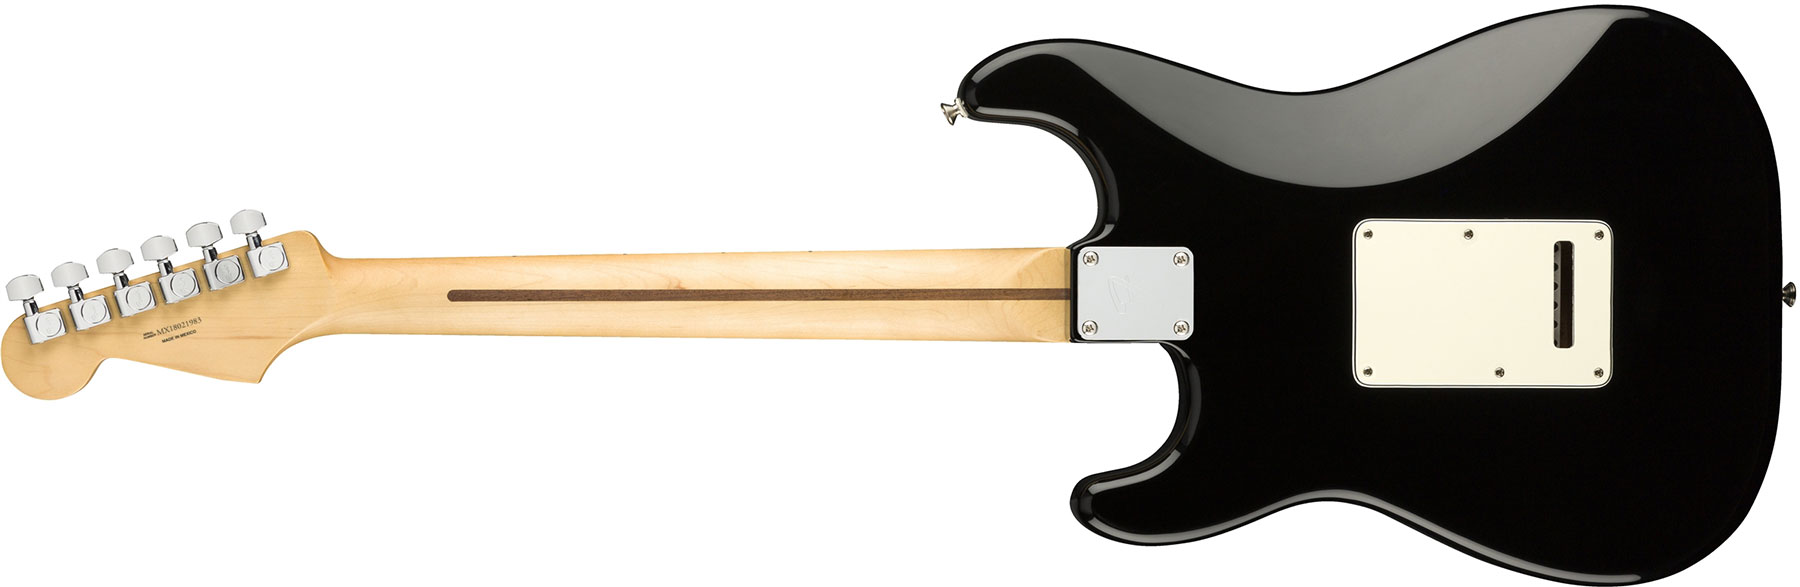 Fender Strat Player Mex Hss Mn - Black - Str shape electric guitar - Variation 1